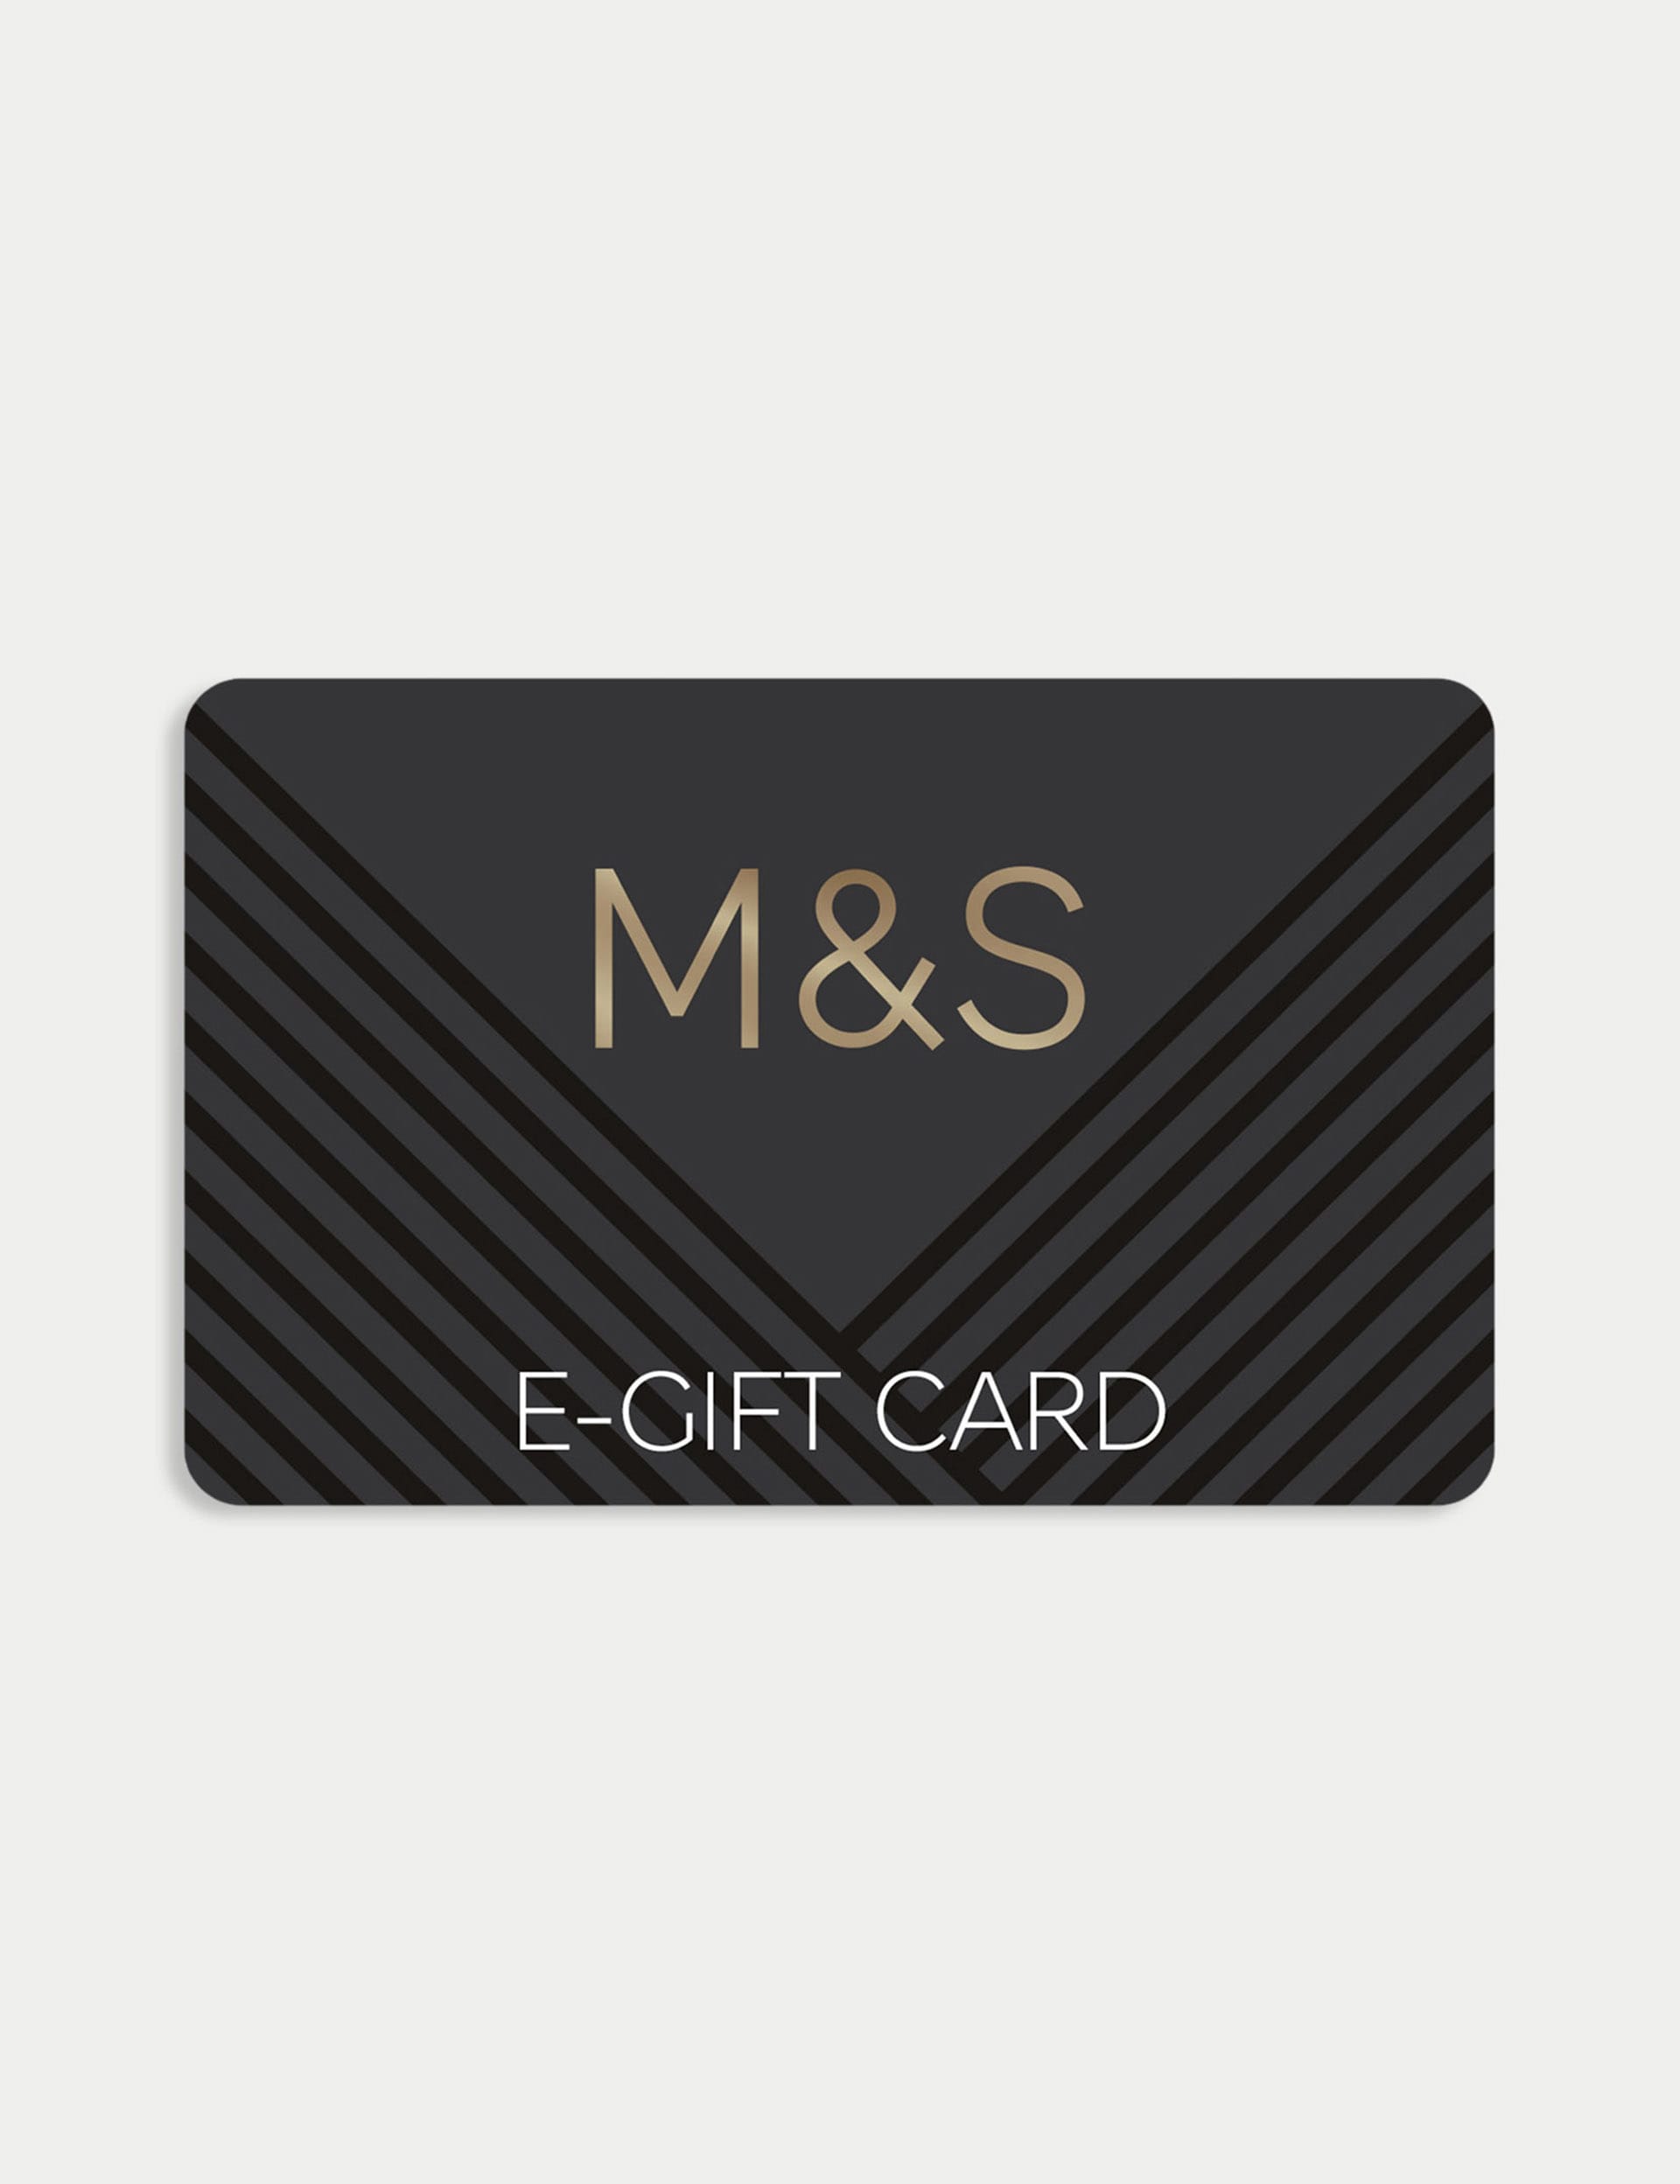 M&S Gift Card E-Gift Card